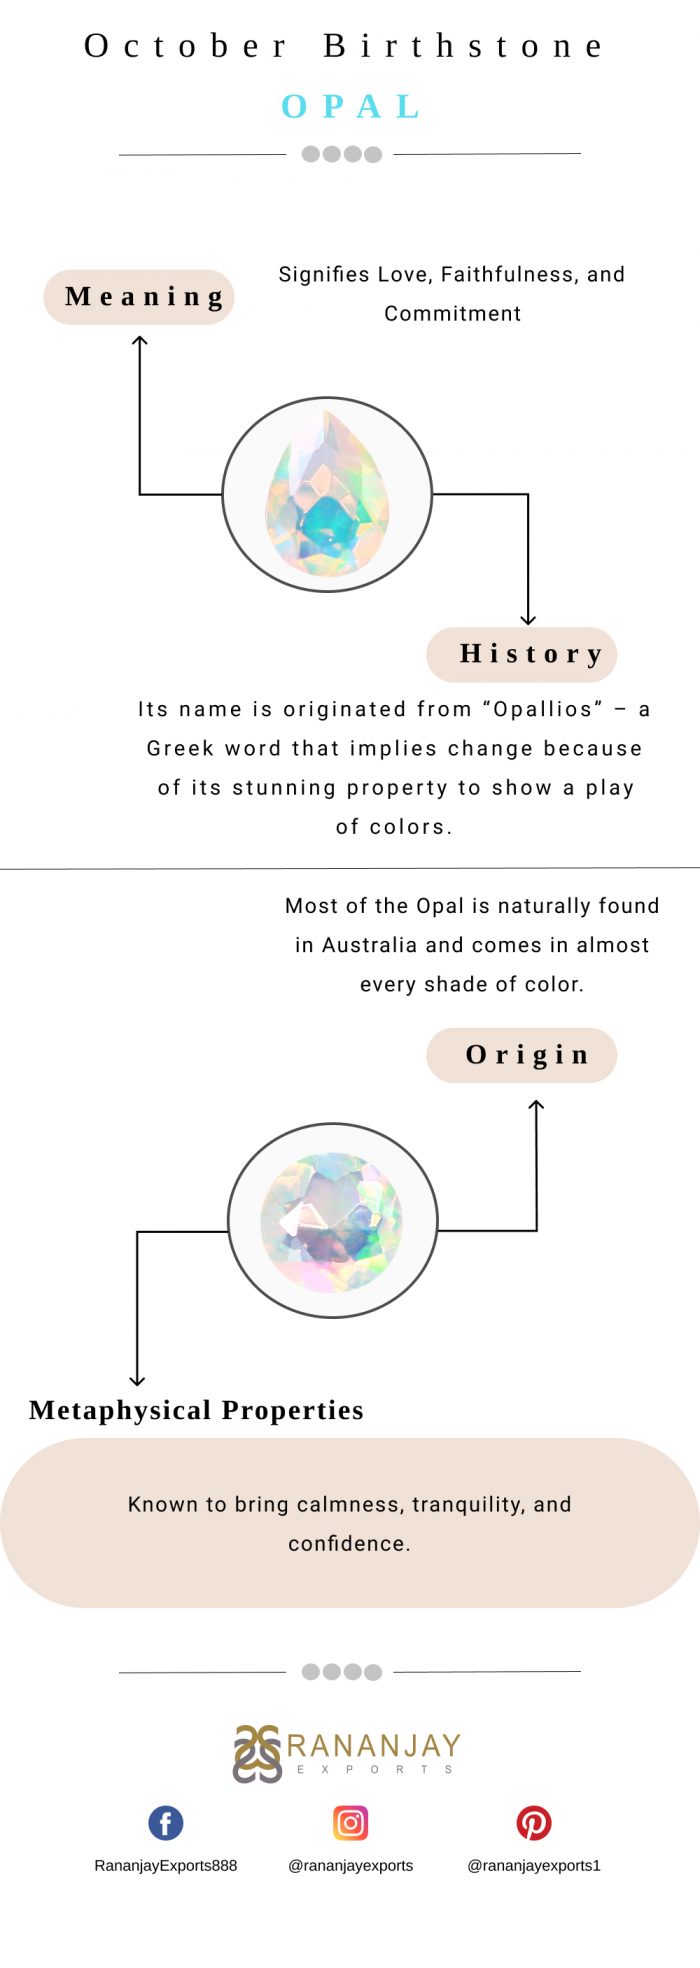 October Birthstone – Opal